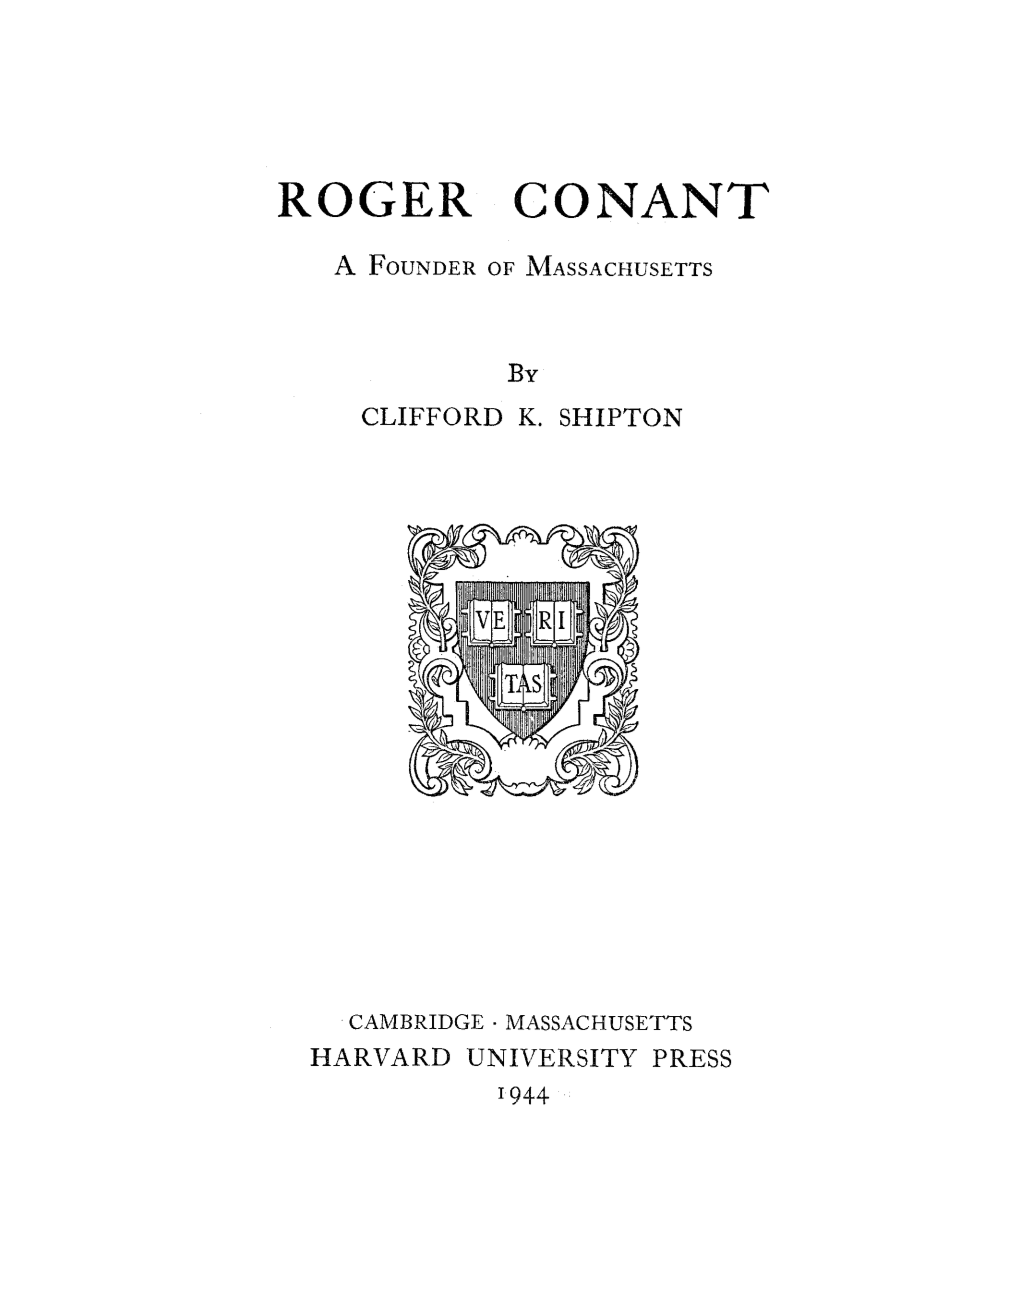 Roger Conant